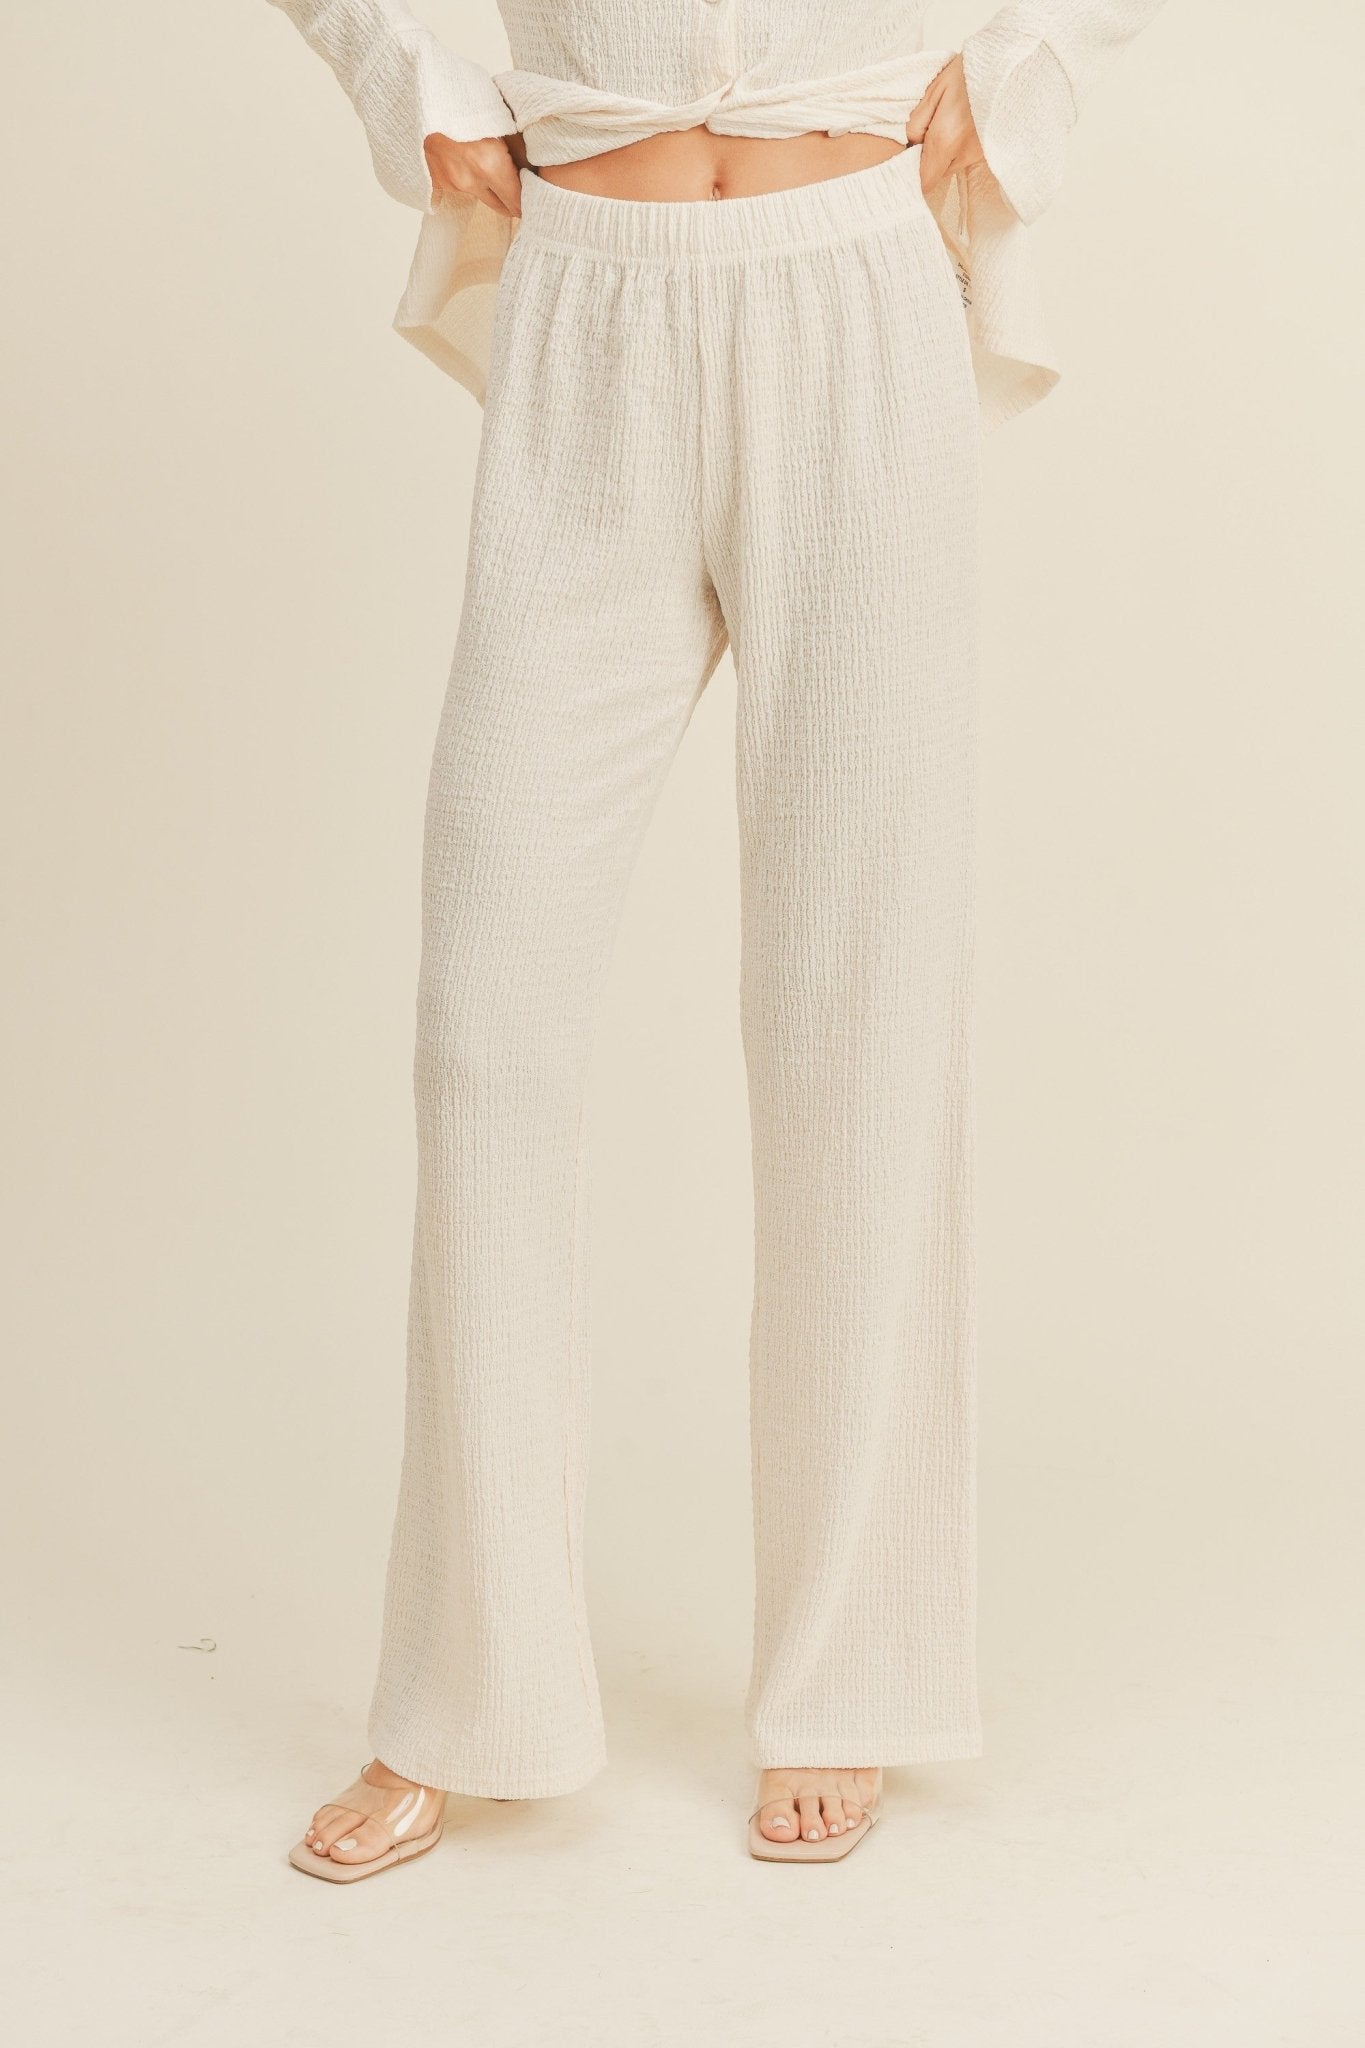 Textured Fabric Pants (Cream) - Small - Pants